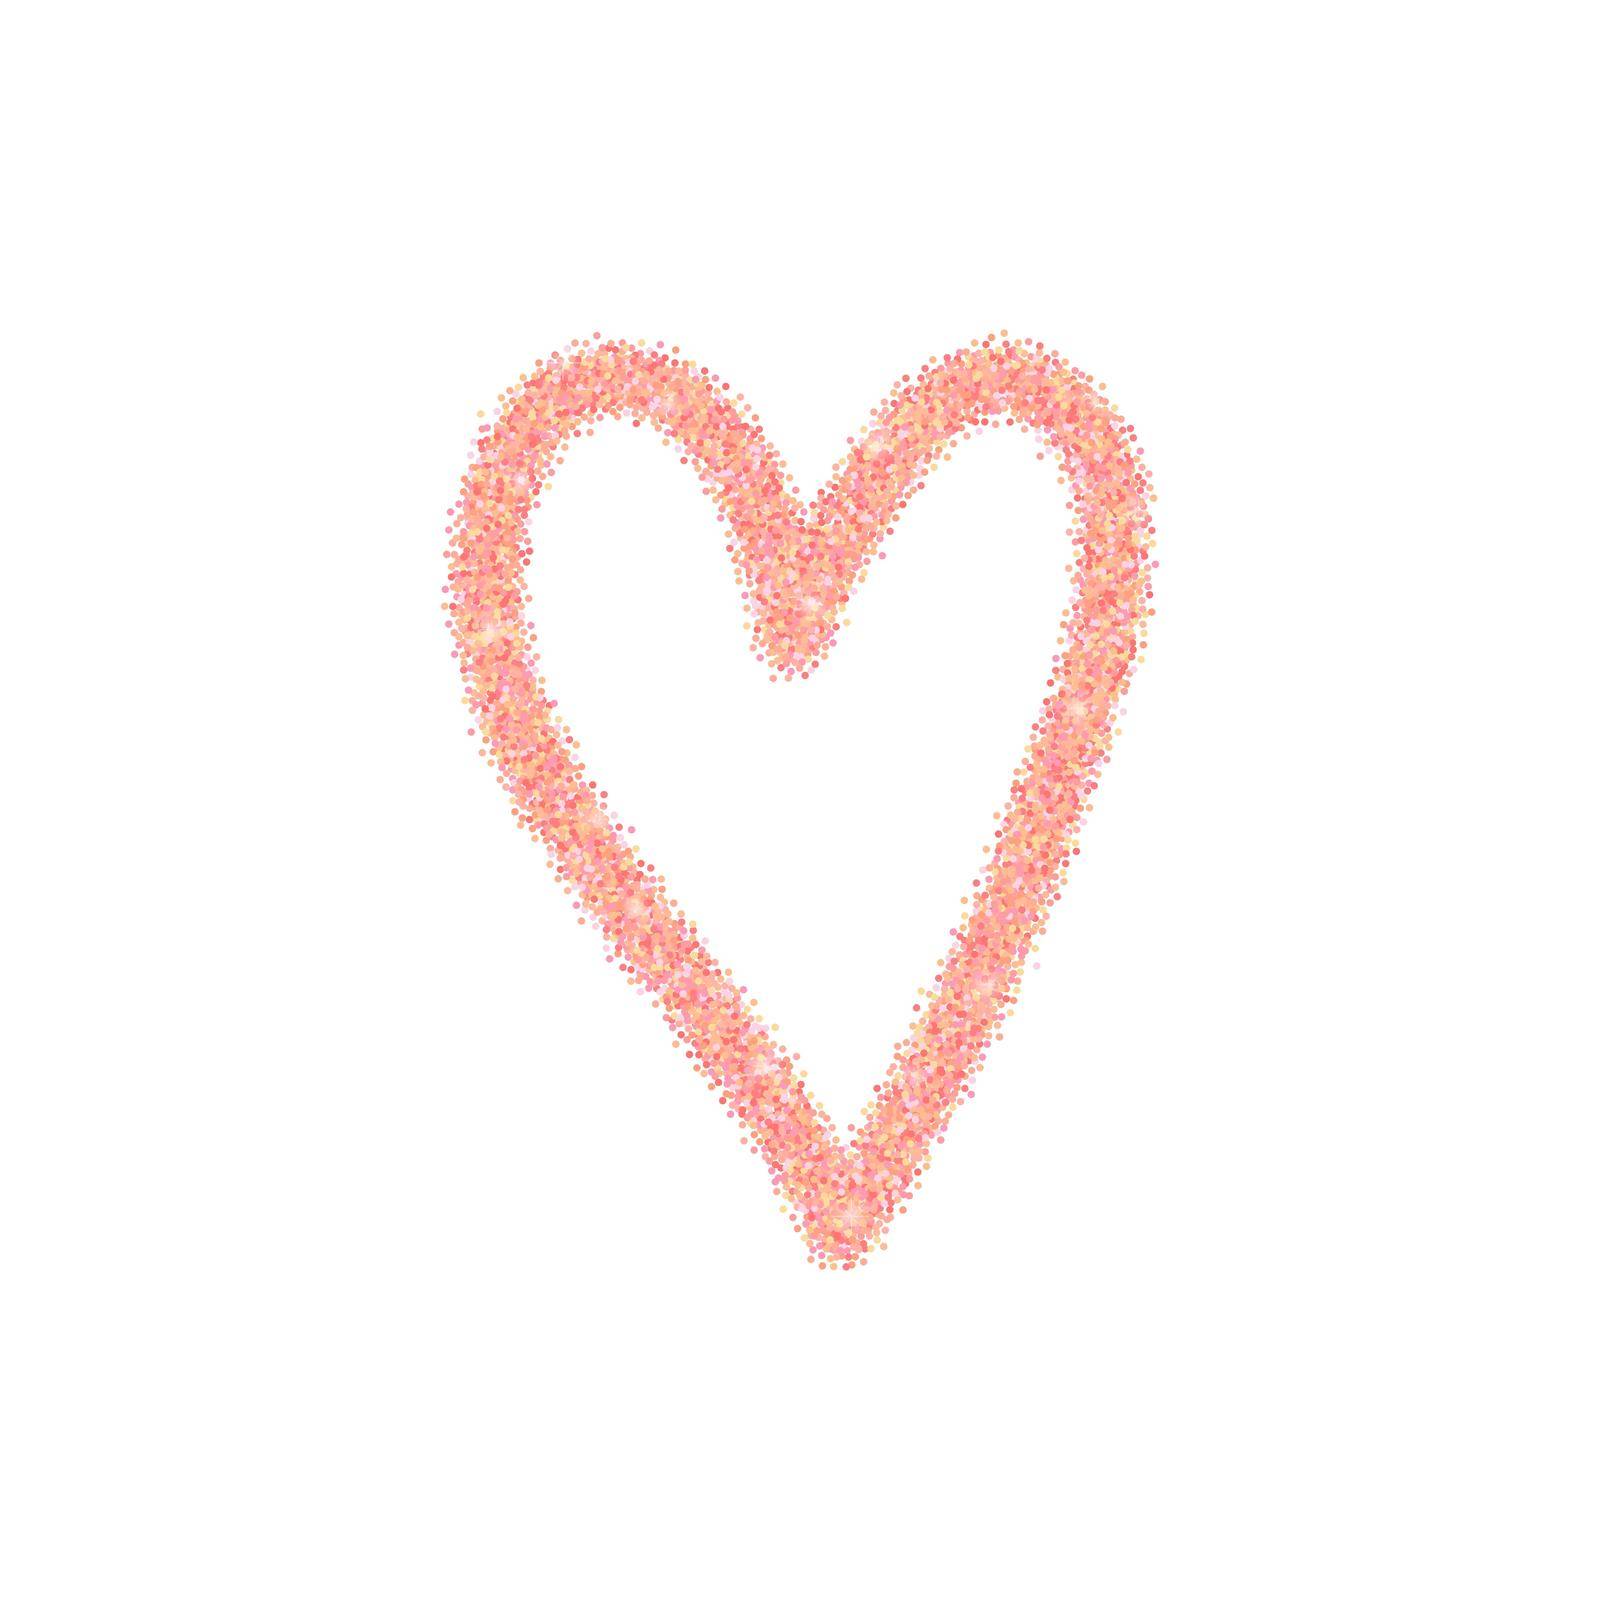 Rose gold glitter heart isolated on white background.